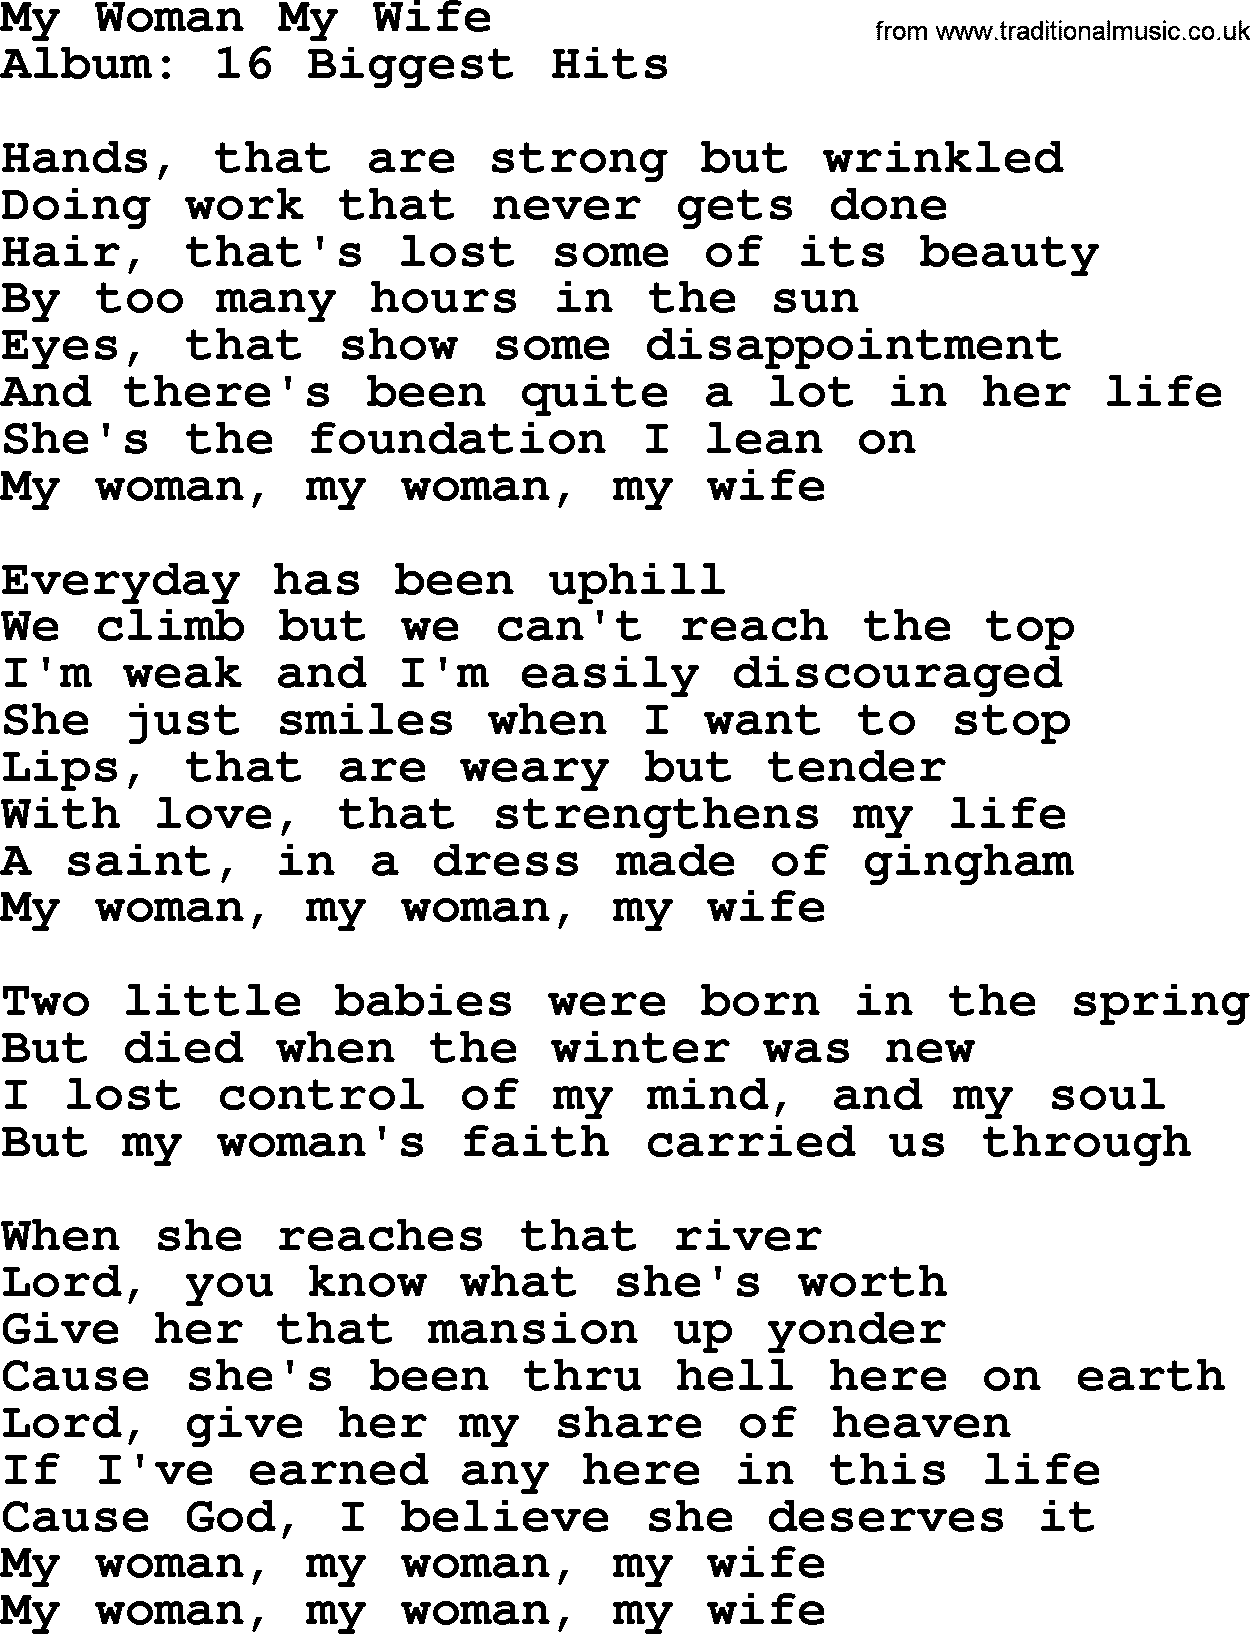 Marty Robbins song: My Woman My Wife, lyrics